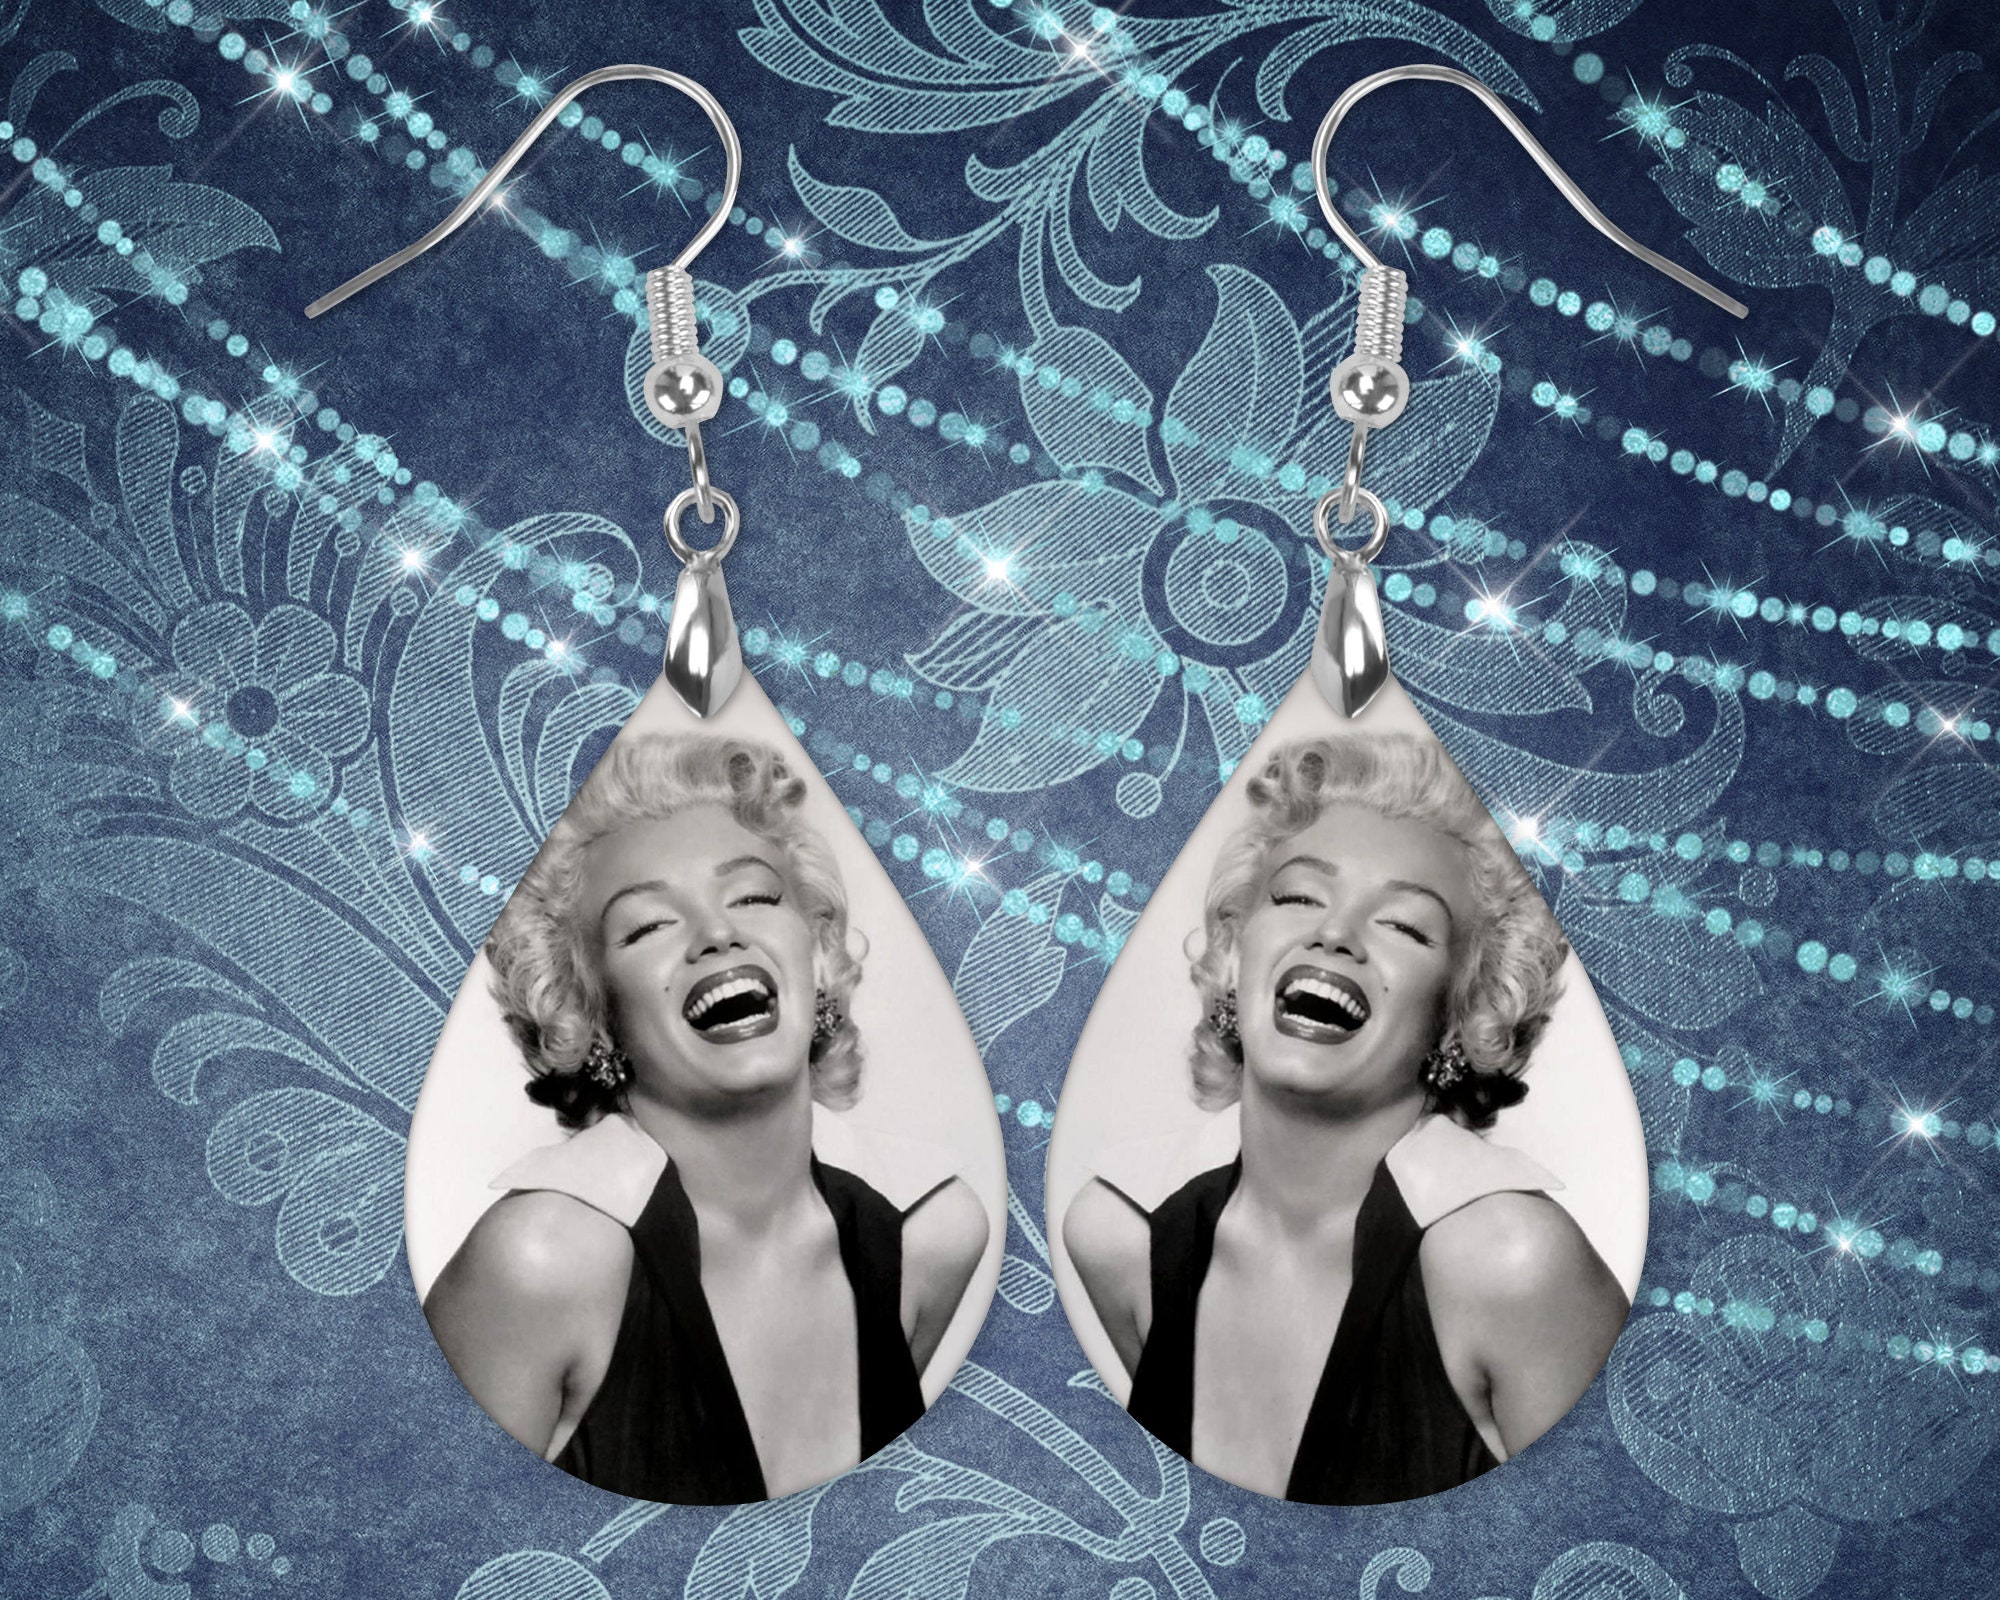 22*30CM Celebrity Marilyn Monroe Printed Faux Leather Diy Sewing